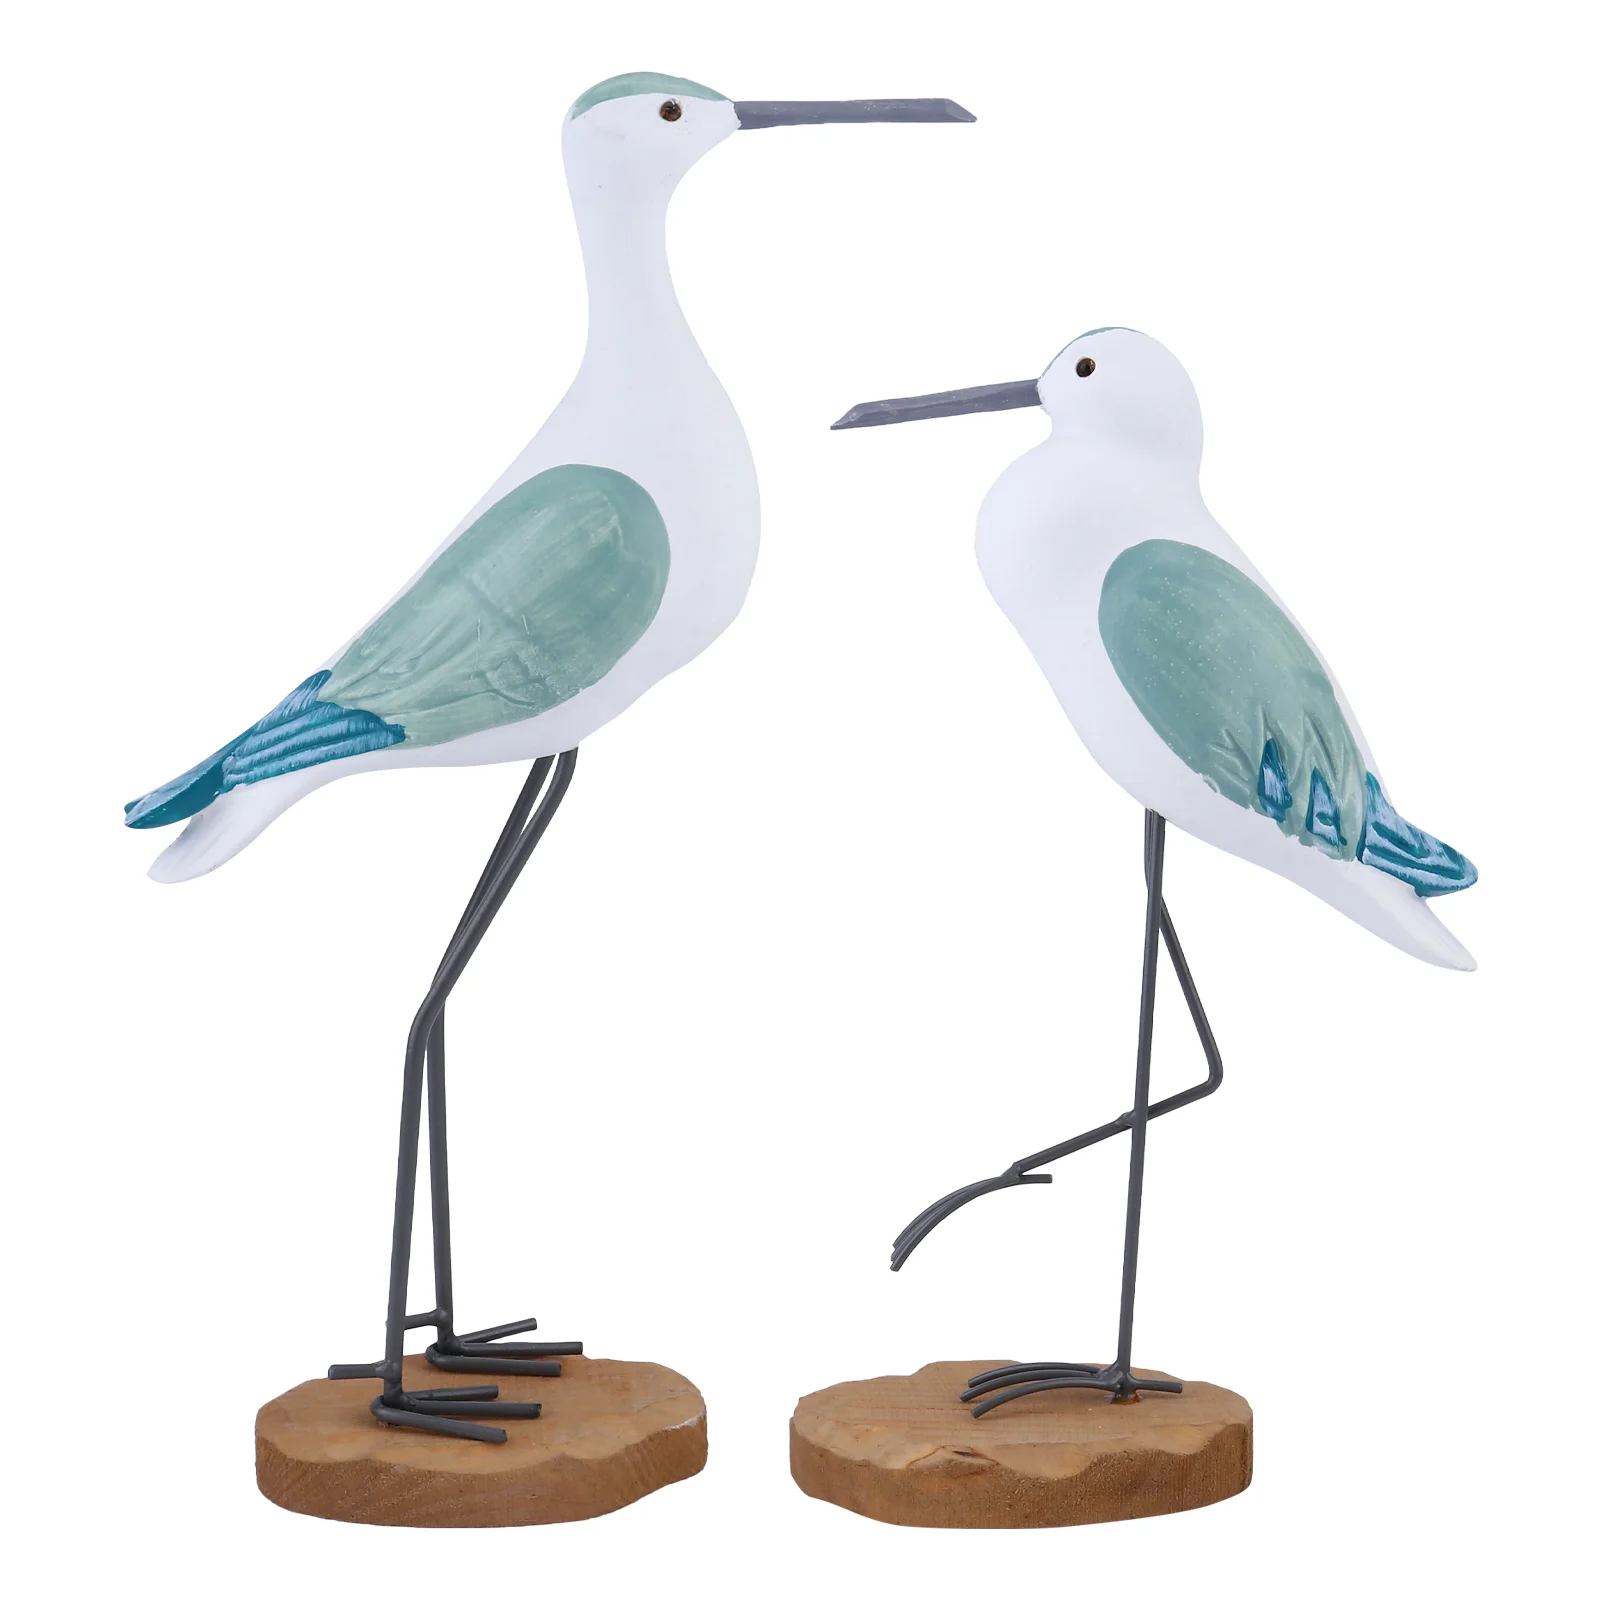 

Seagull Bird Statue Nautical Figurine Decor Sculpture Wooden Beach Ornament Figurines Garden Sea Statues Coastal Ornaments Home